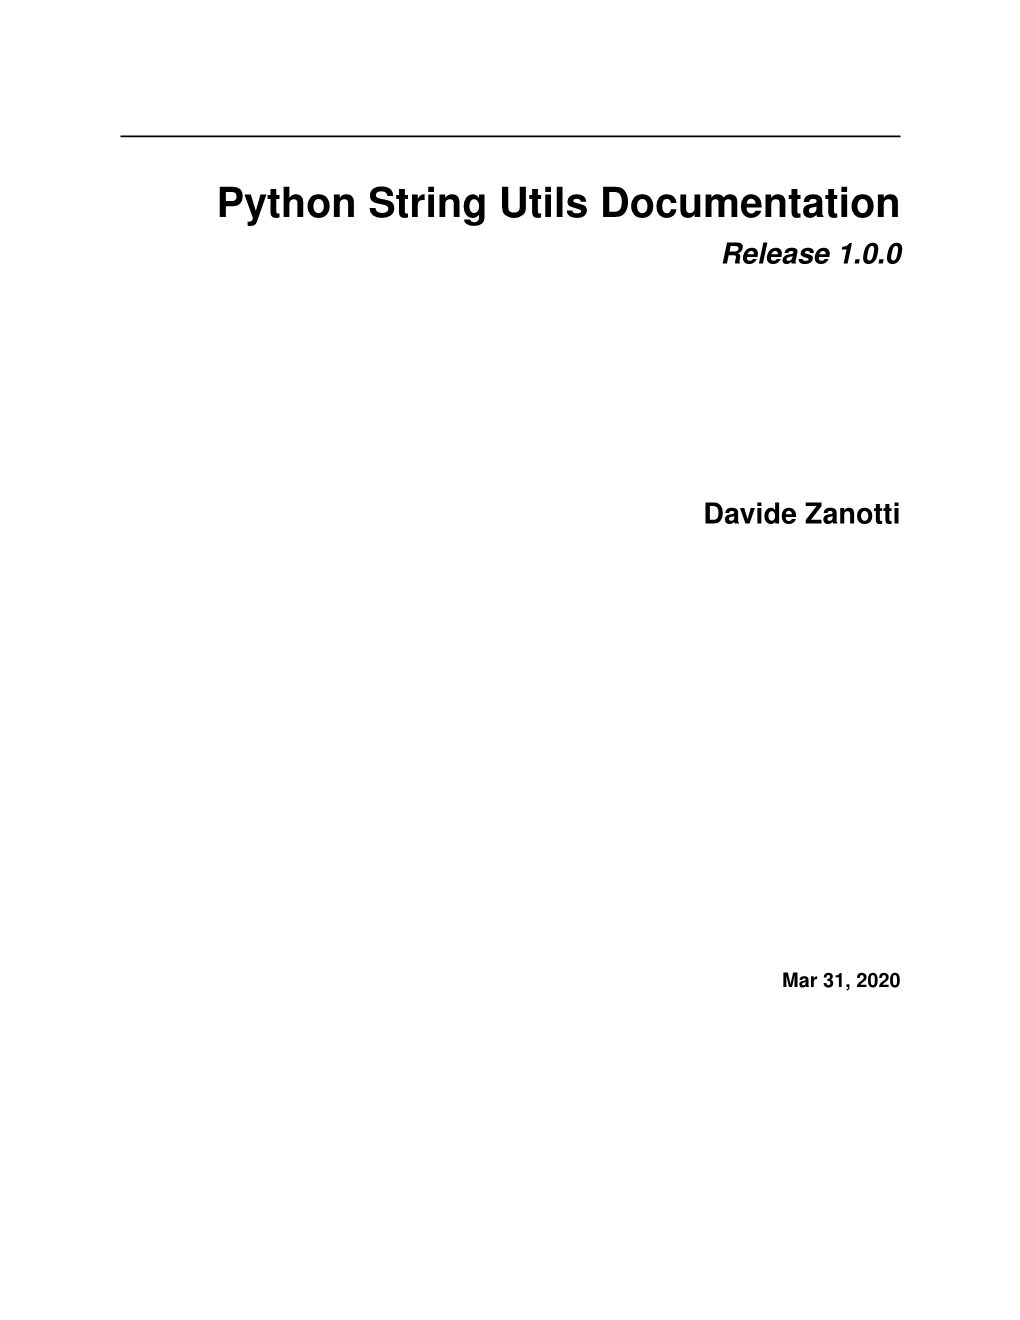 Python String Utils Documentation Release 1.0.0